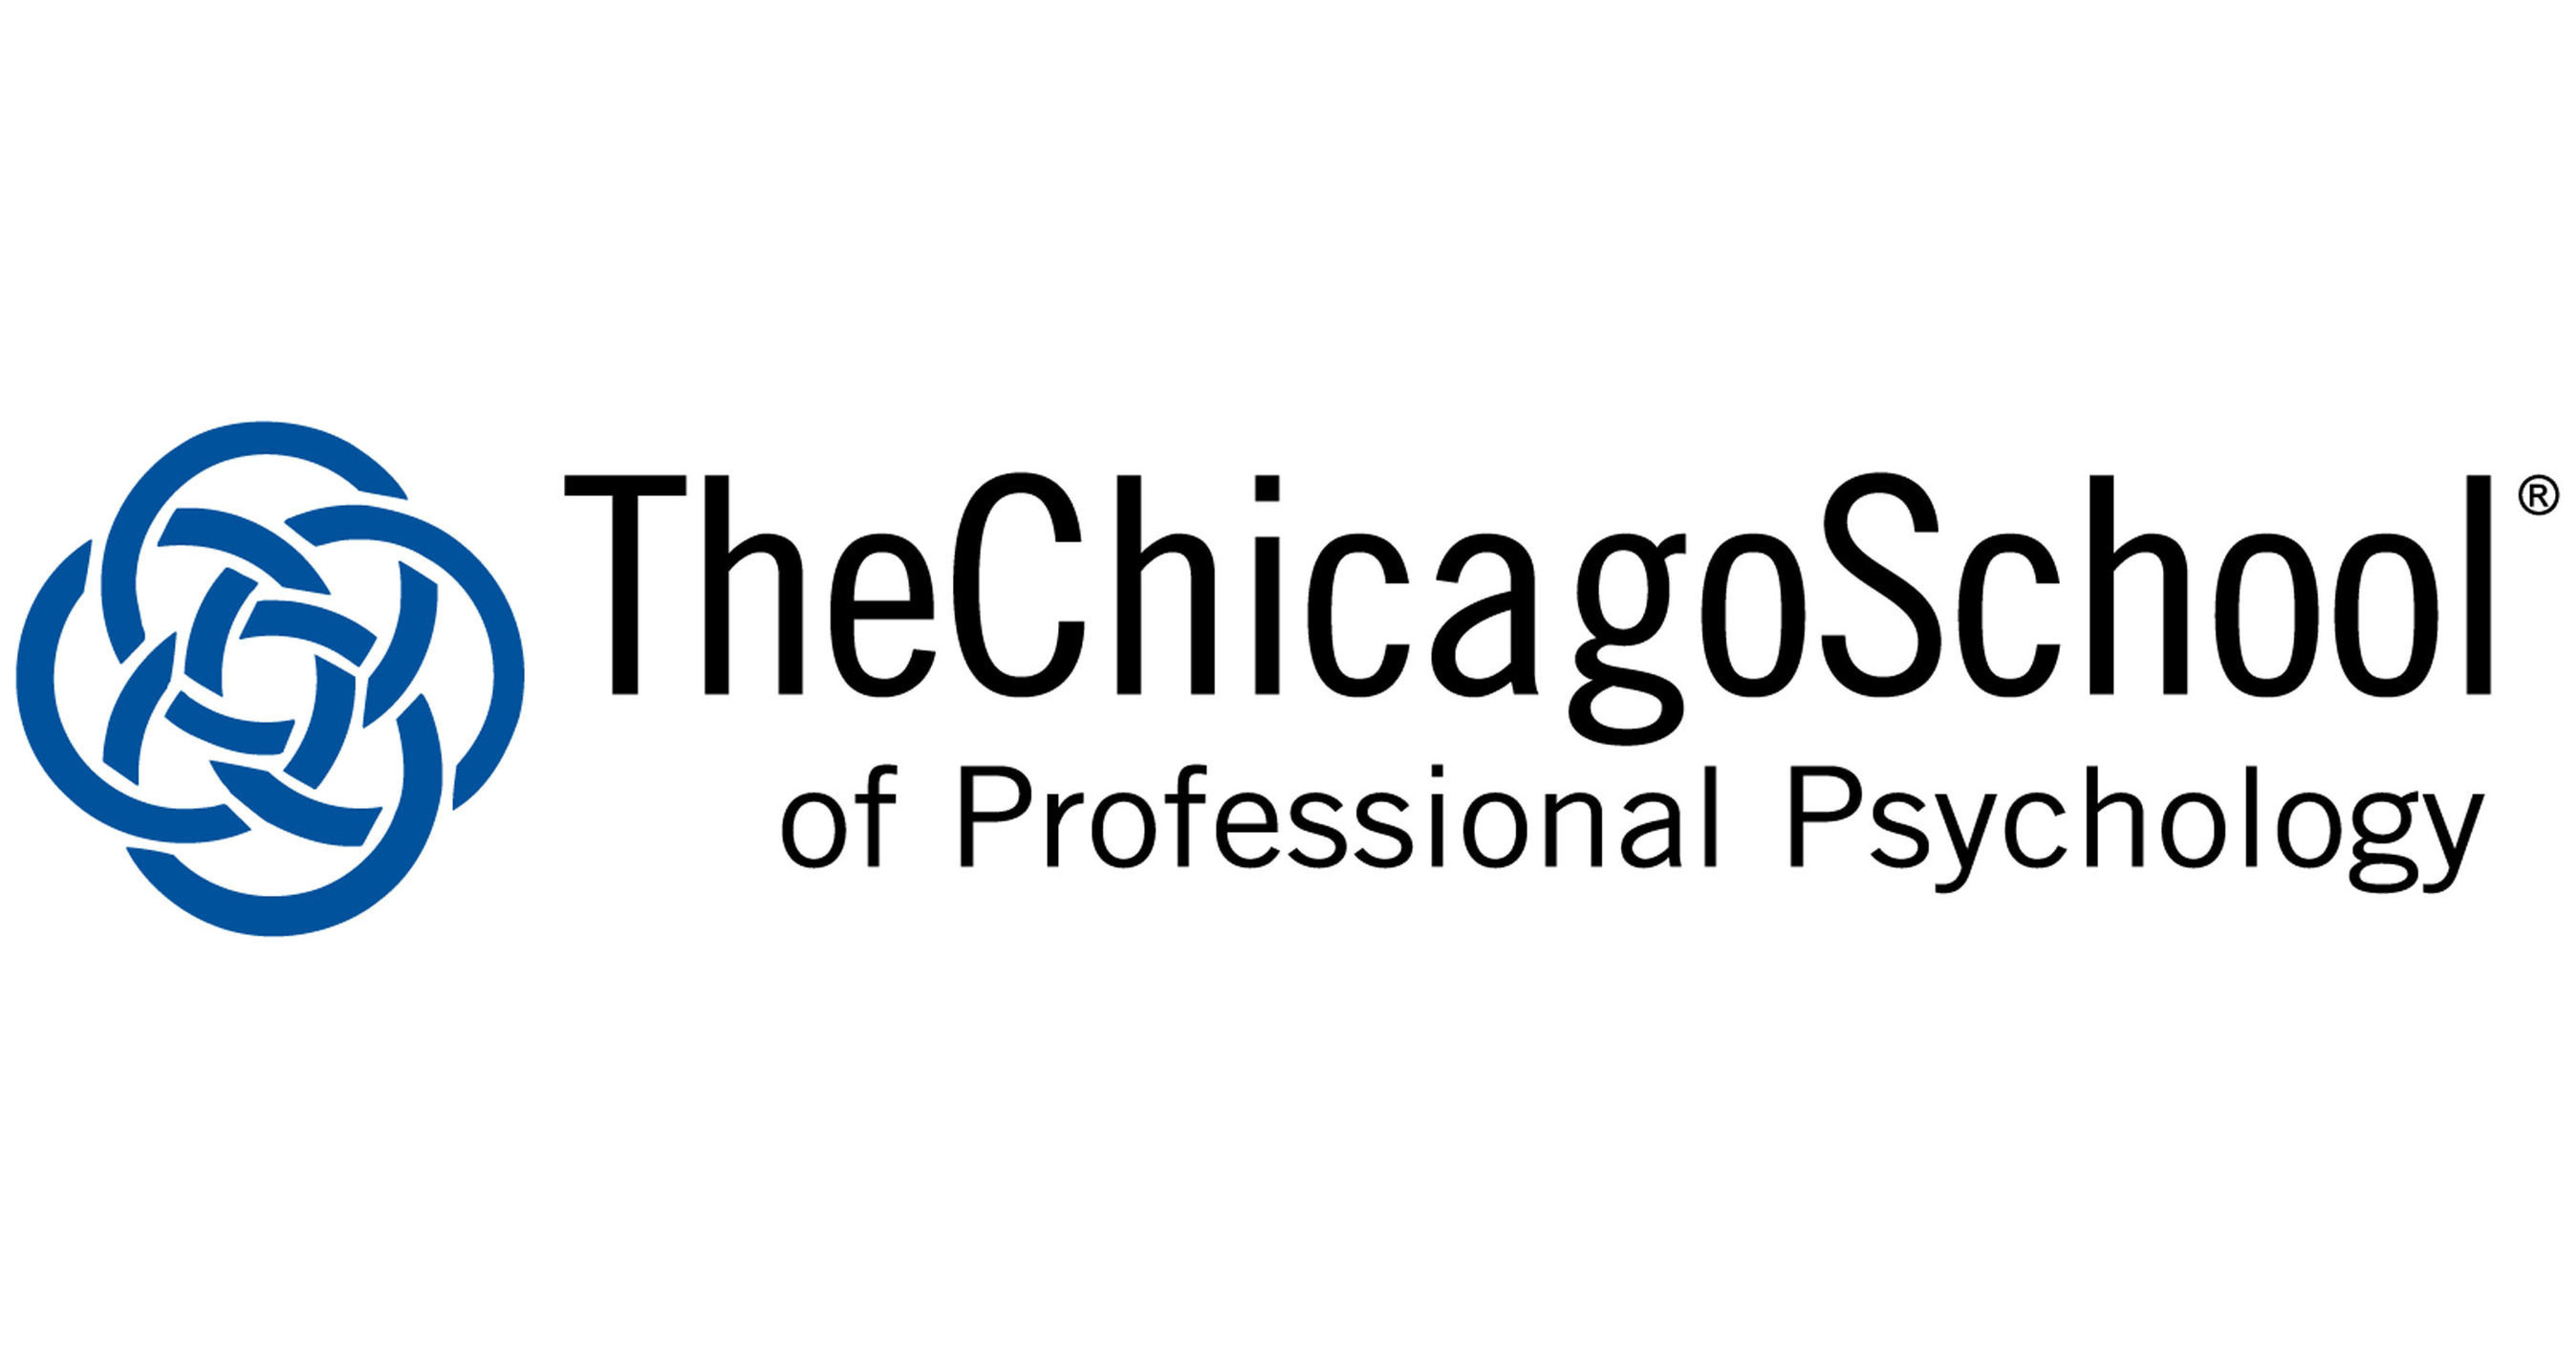 phd psychology programs chicago